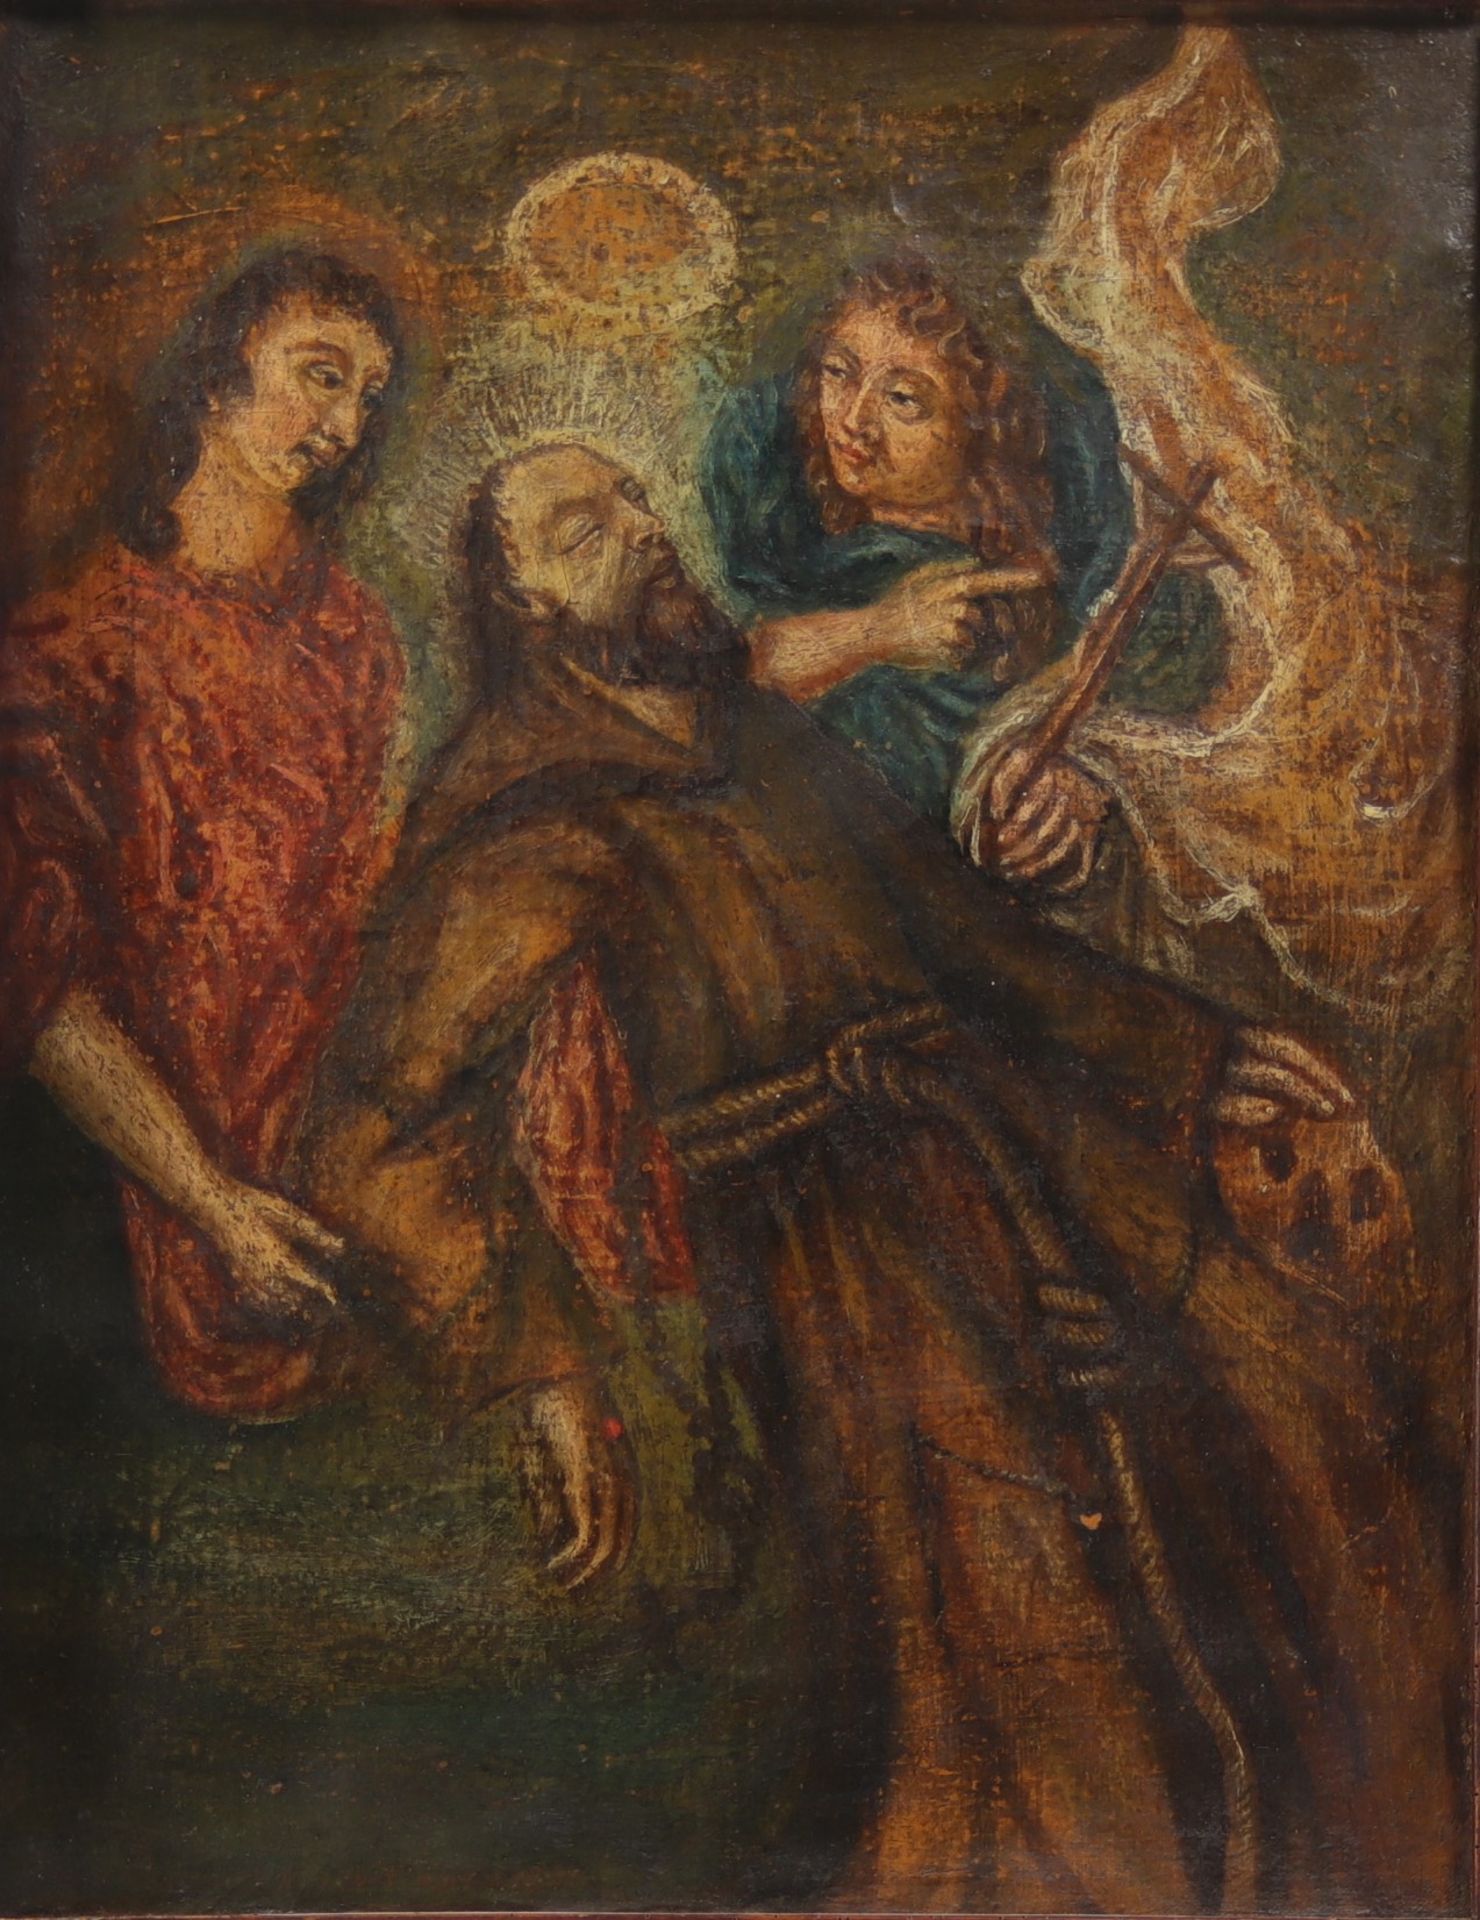 Oil on canvas 17th century religious scene on canvas